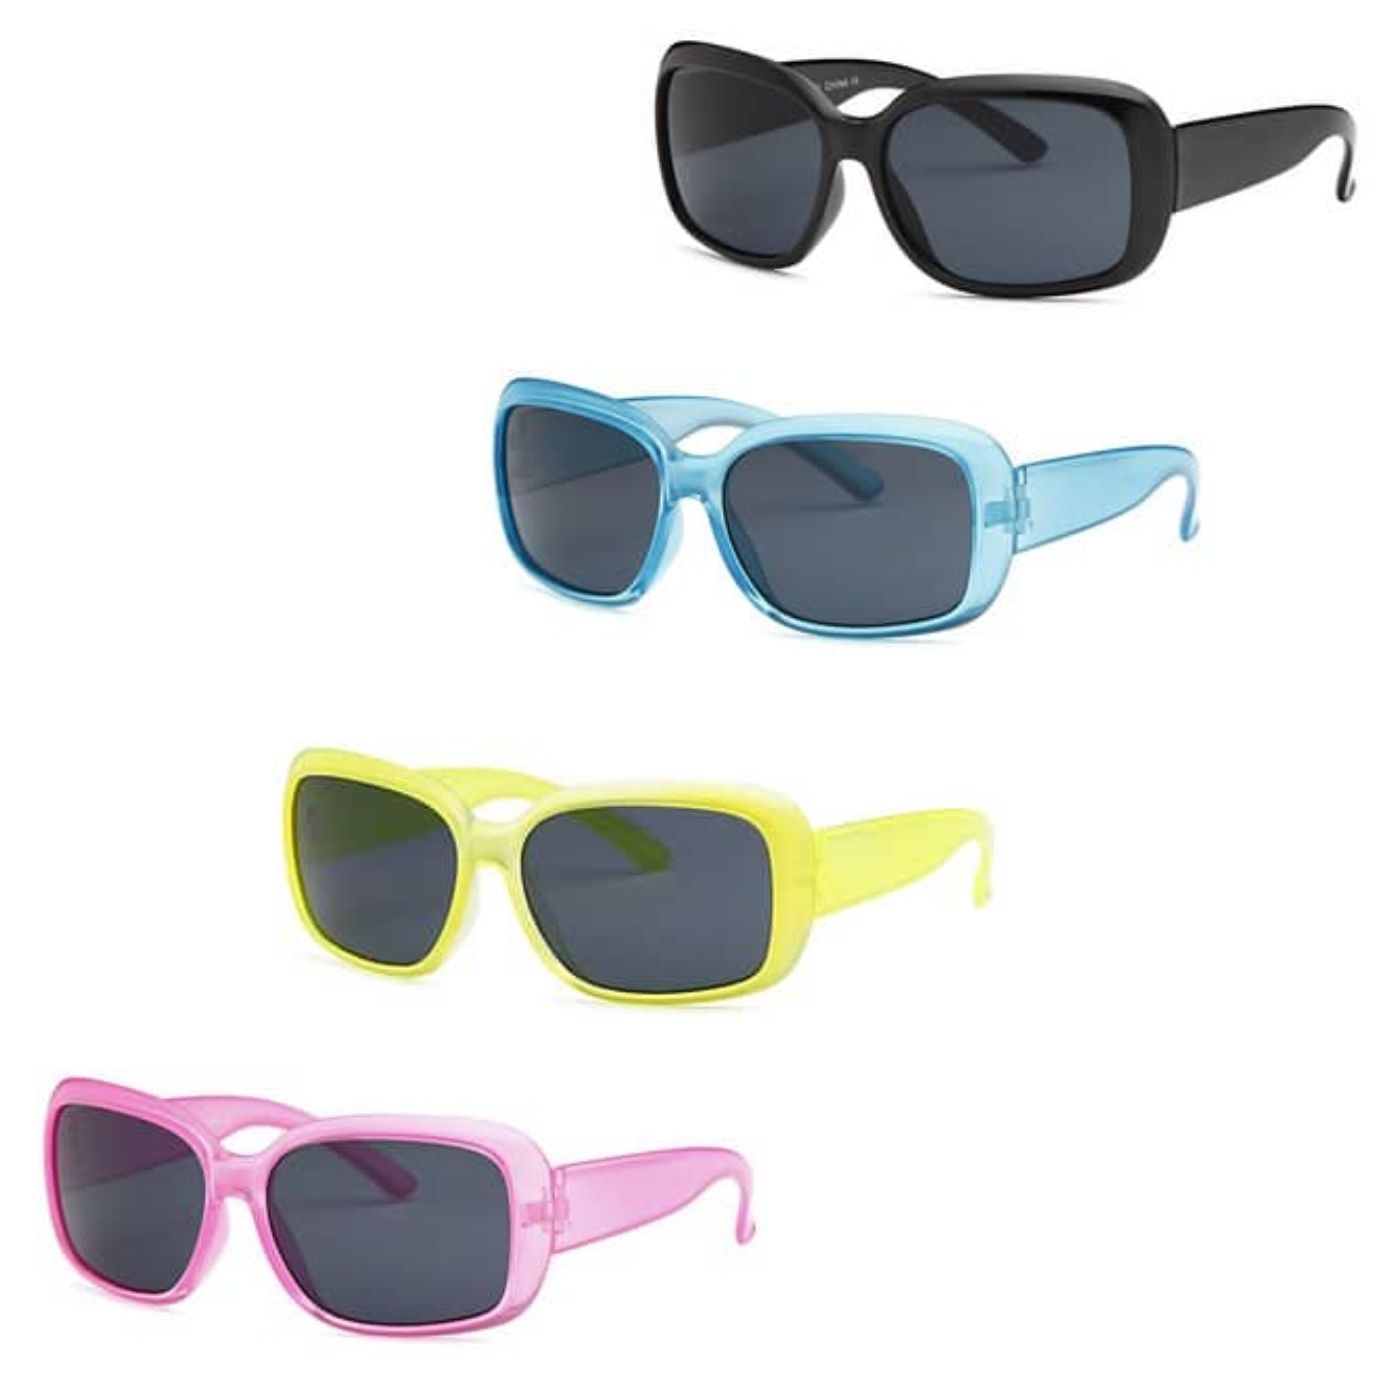 AFONiE Fashion Girl Sunglasses -Box of 12